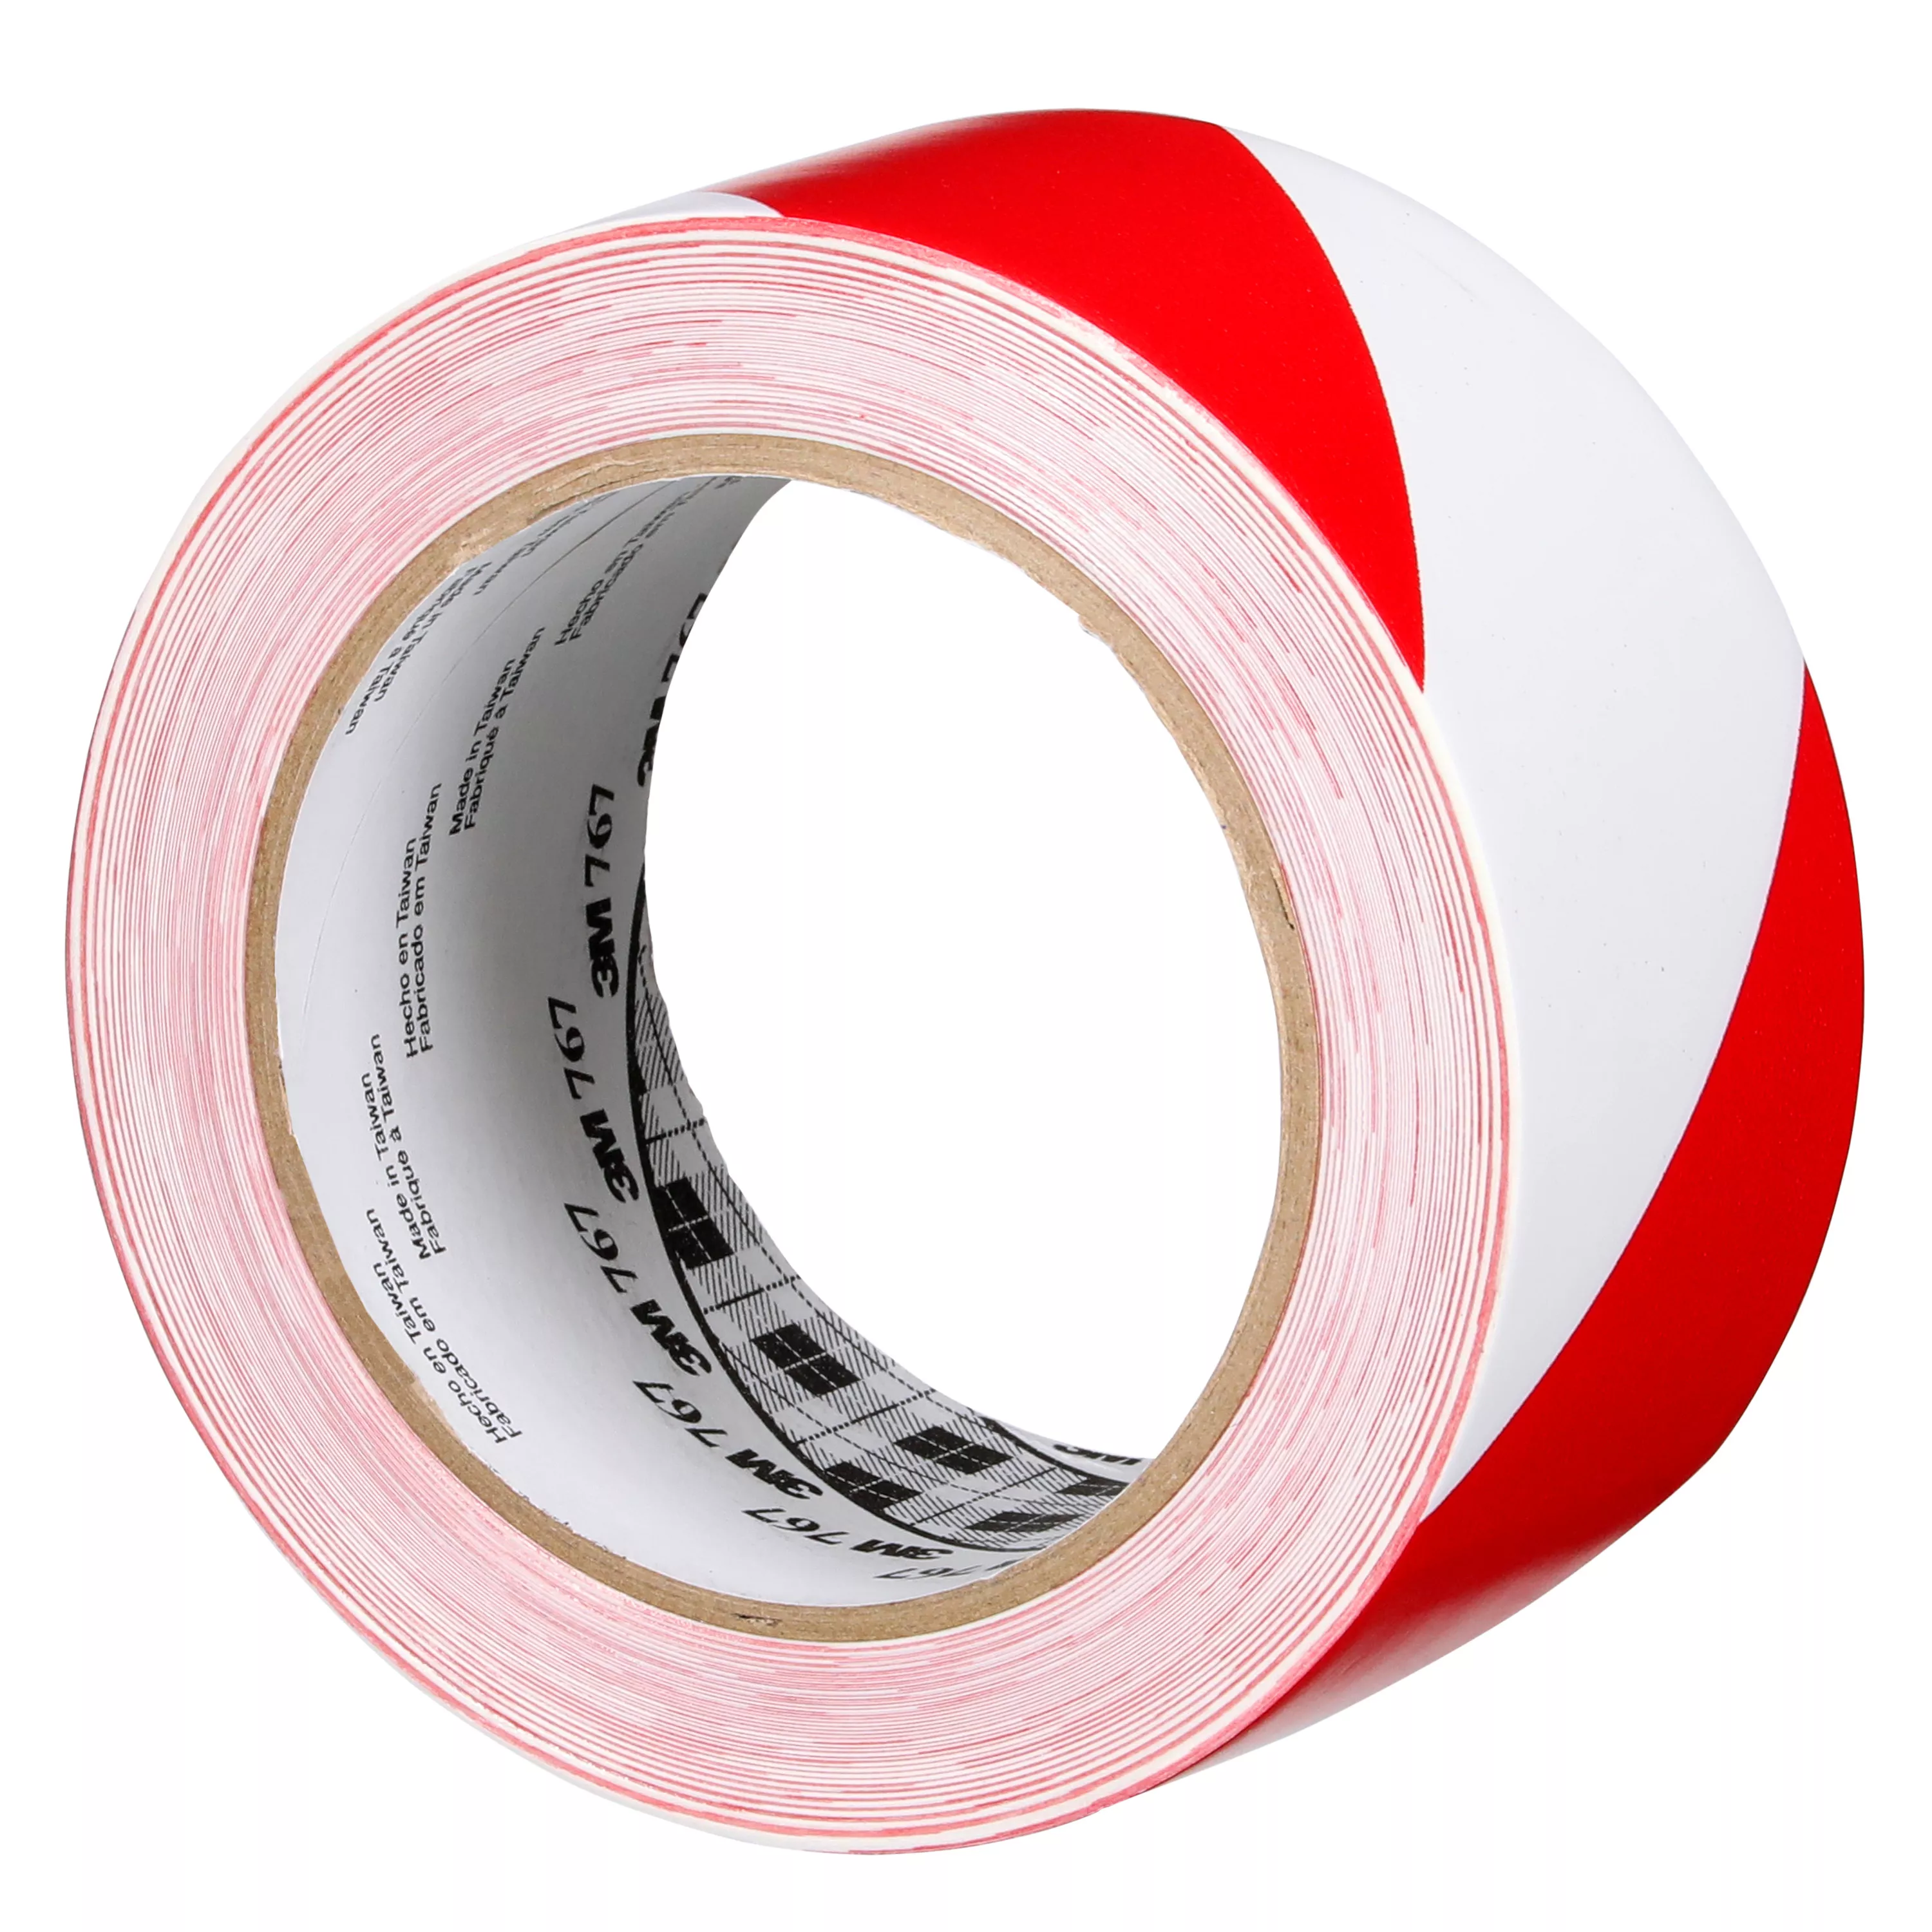 SKU 7010412585 | 3M™ Safety Stripe Vinyl Tape 767